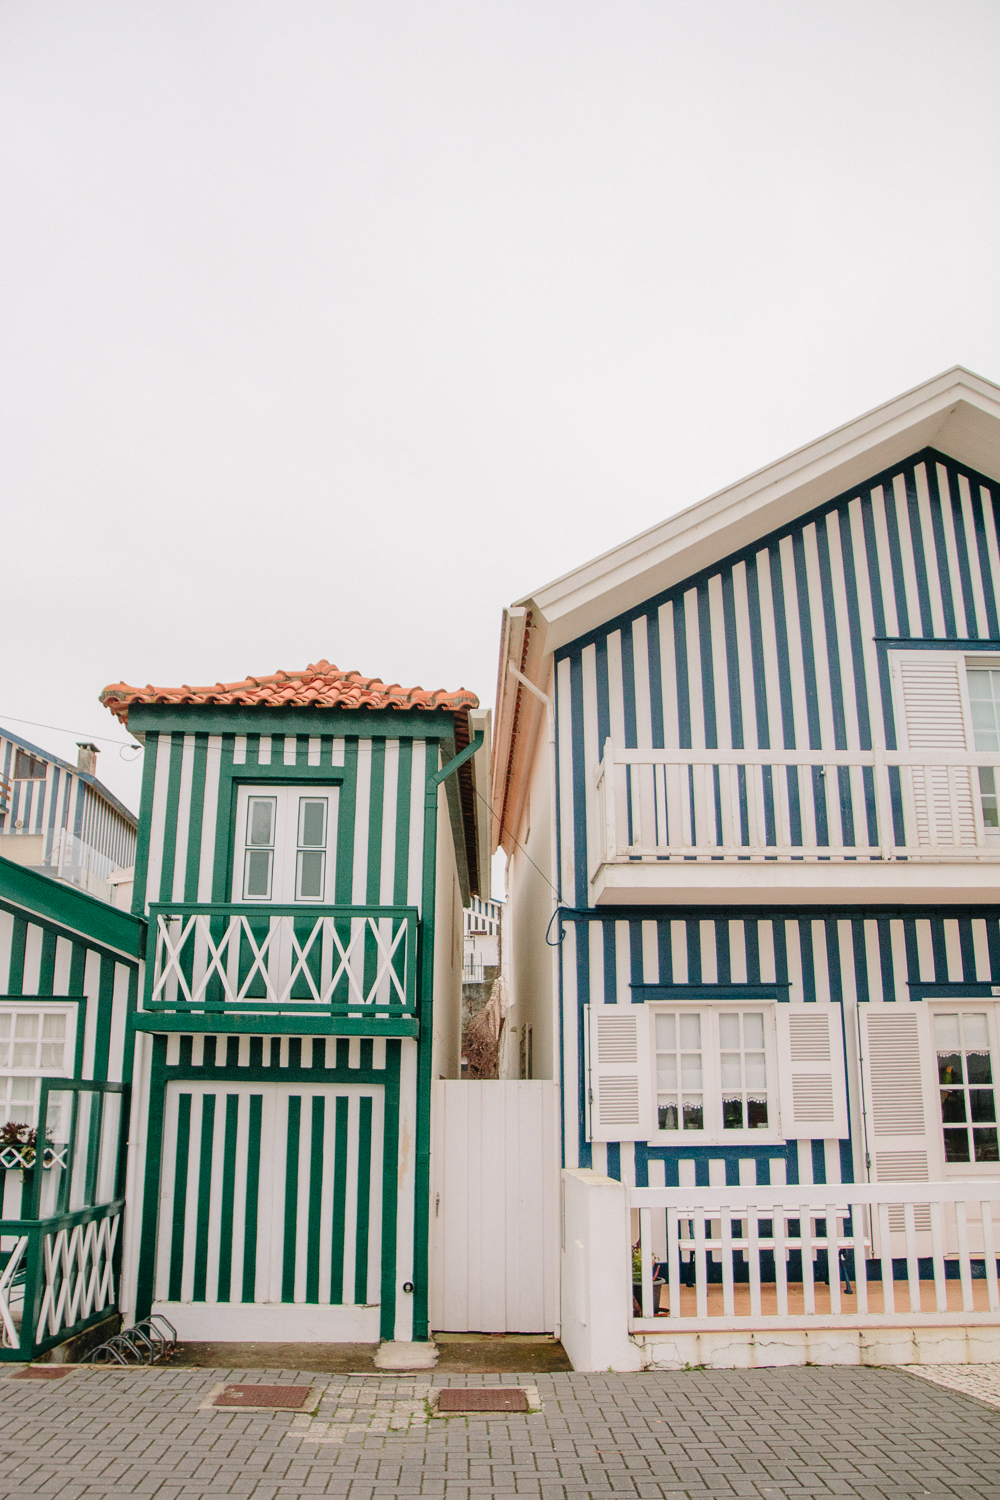 Colourful Striped Houses at Costa Nova Portugal